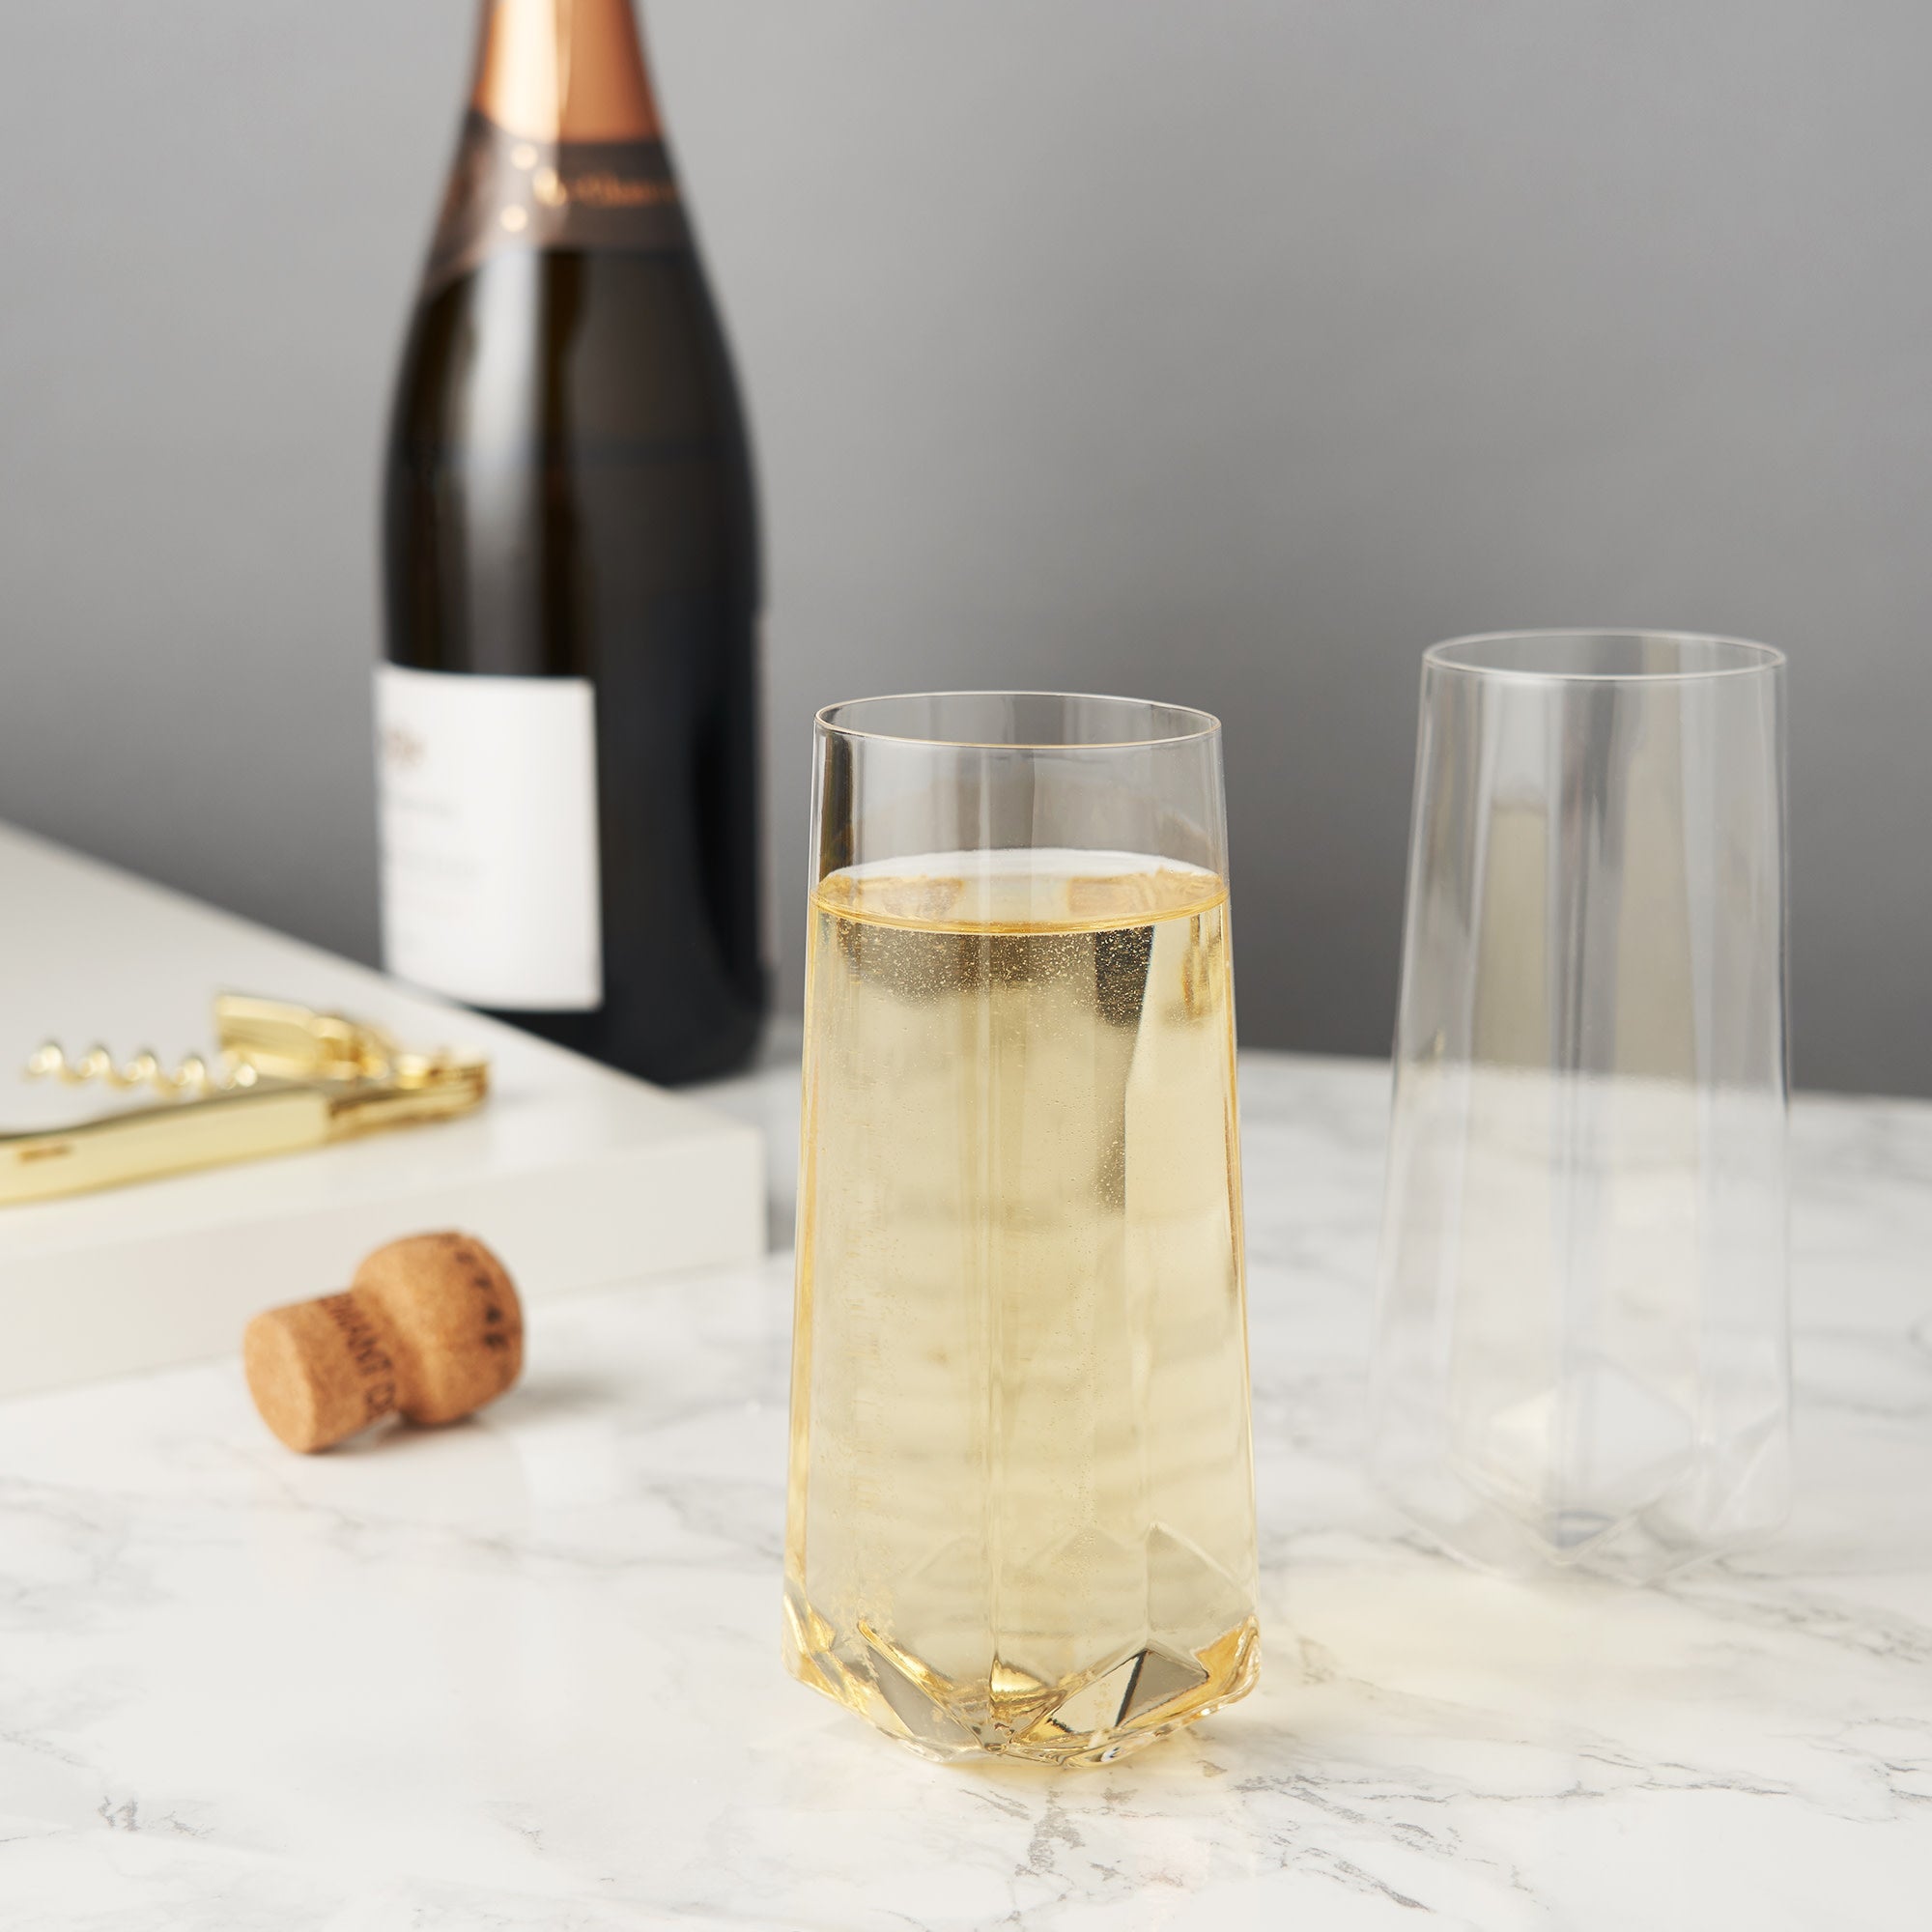 Viski Raye Angled Crystal Champagne Flutes Set Of 2 - Premium